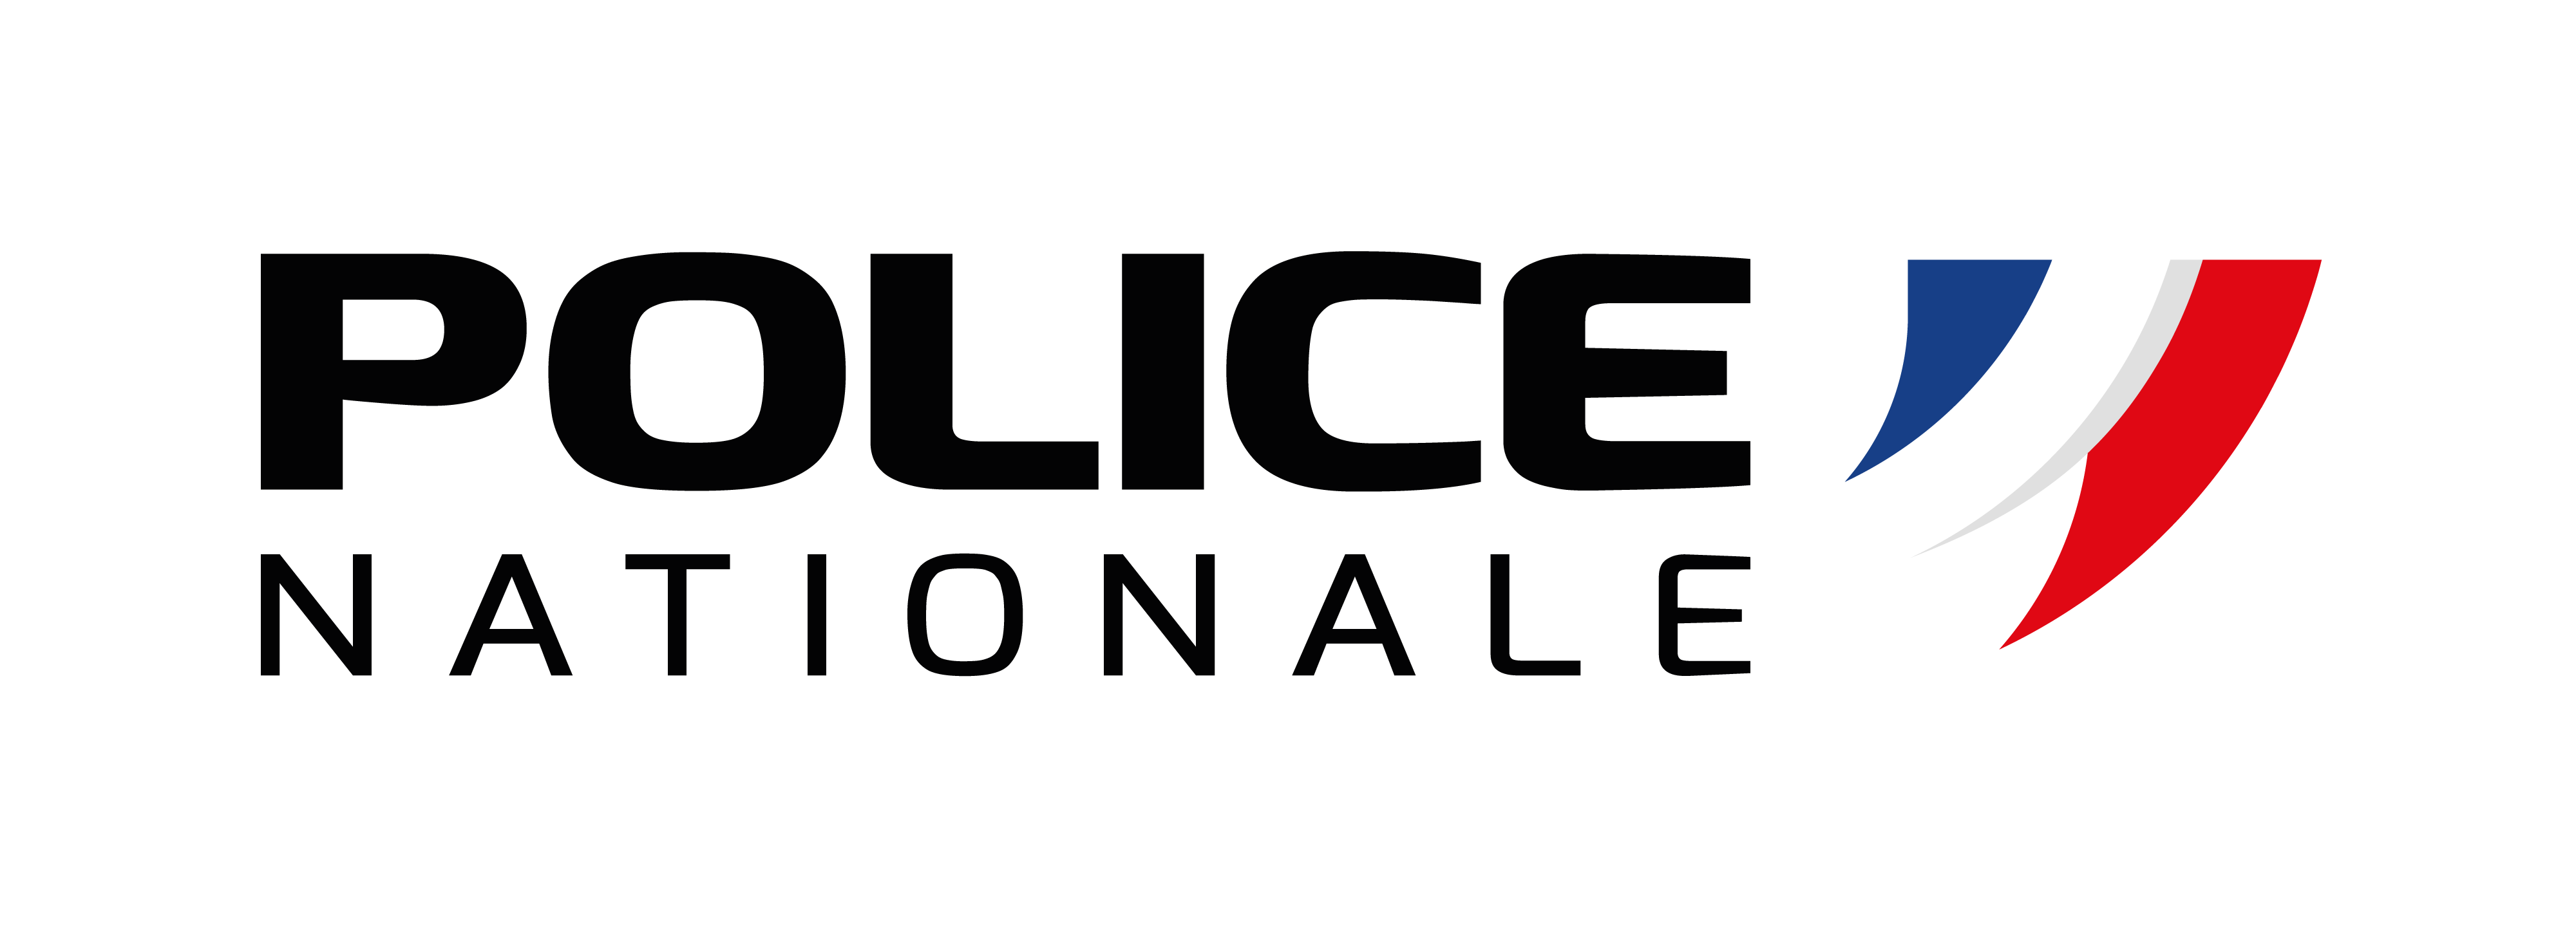 Logo - Police Nationale.png